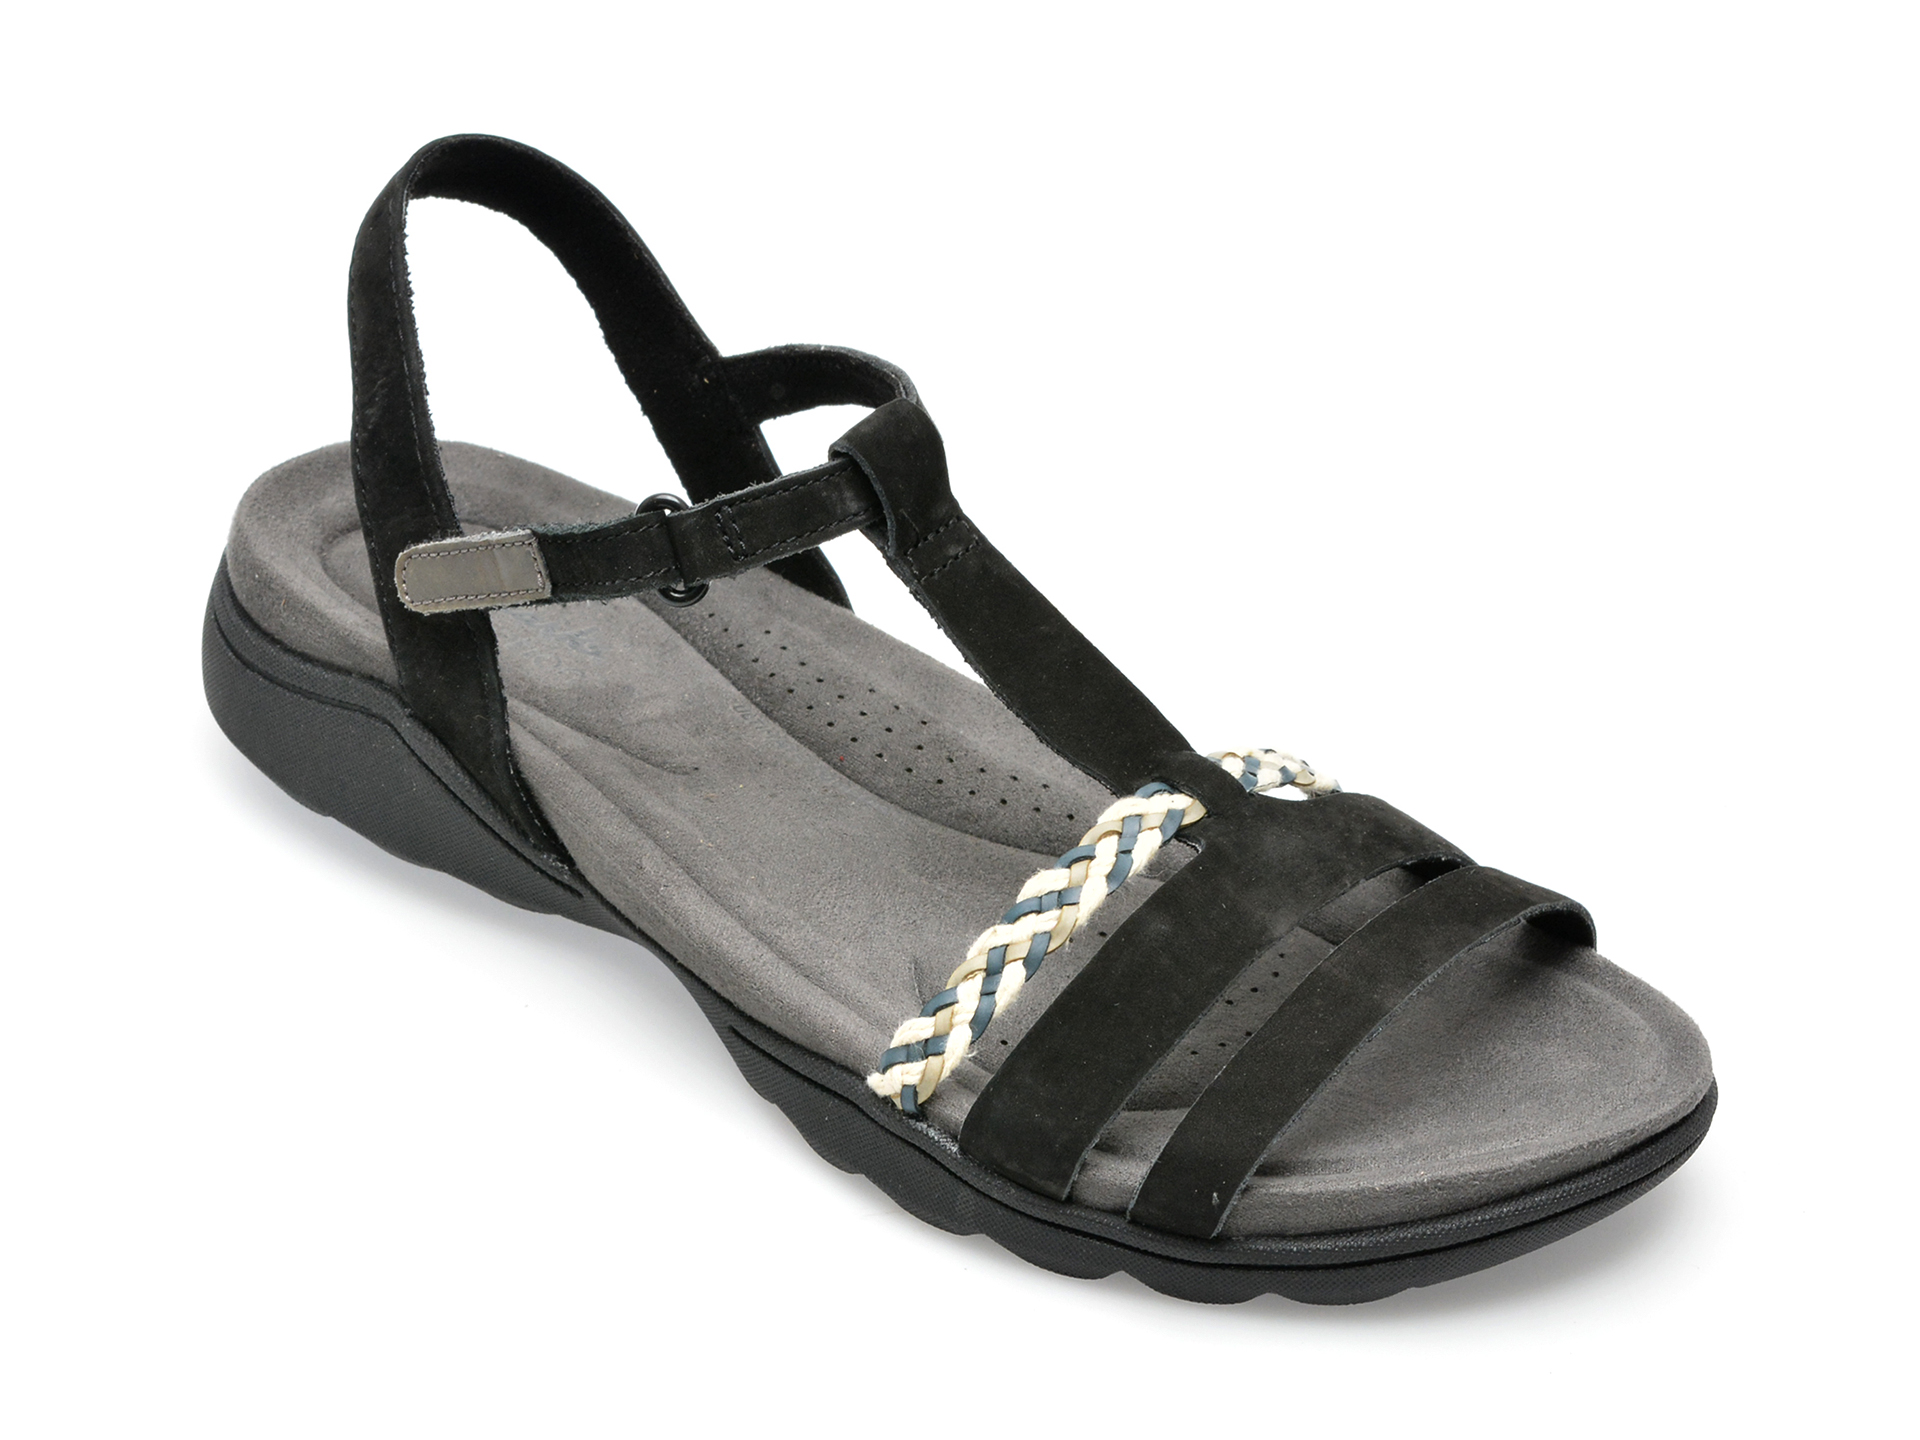 Sandale CLARKS negre, AMANDA TEALITE 0912, din nabuc Clarks